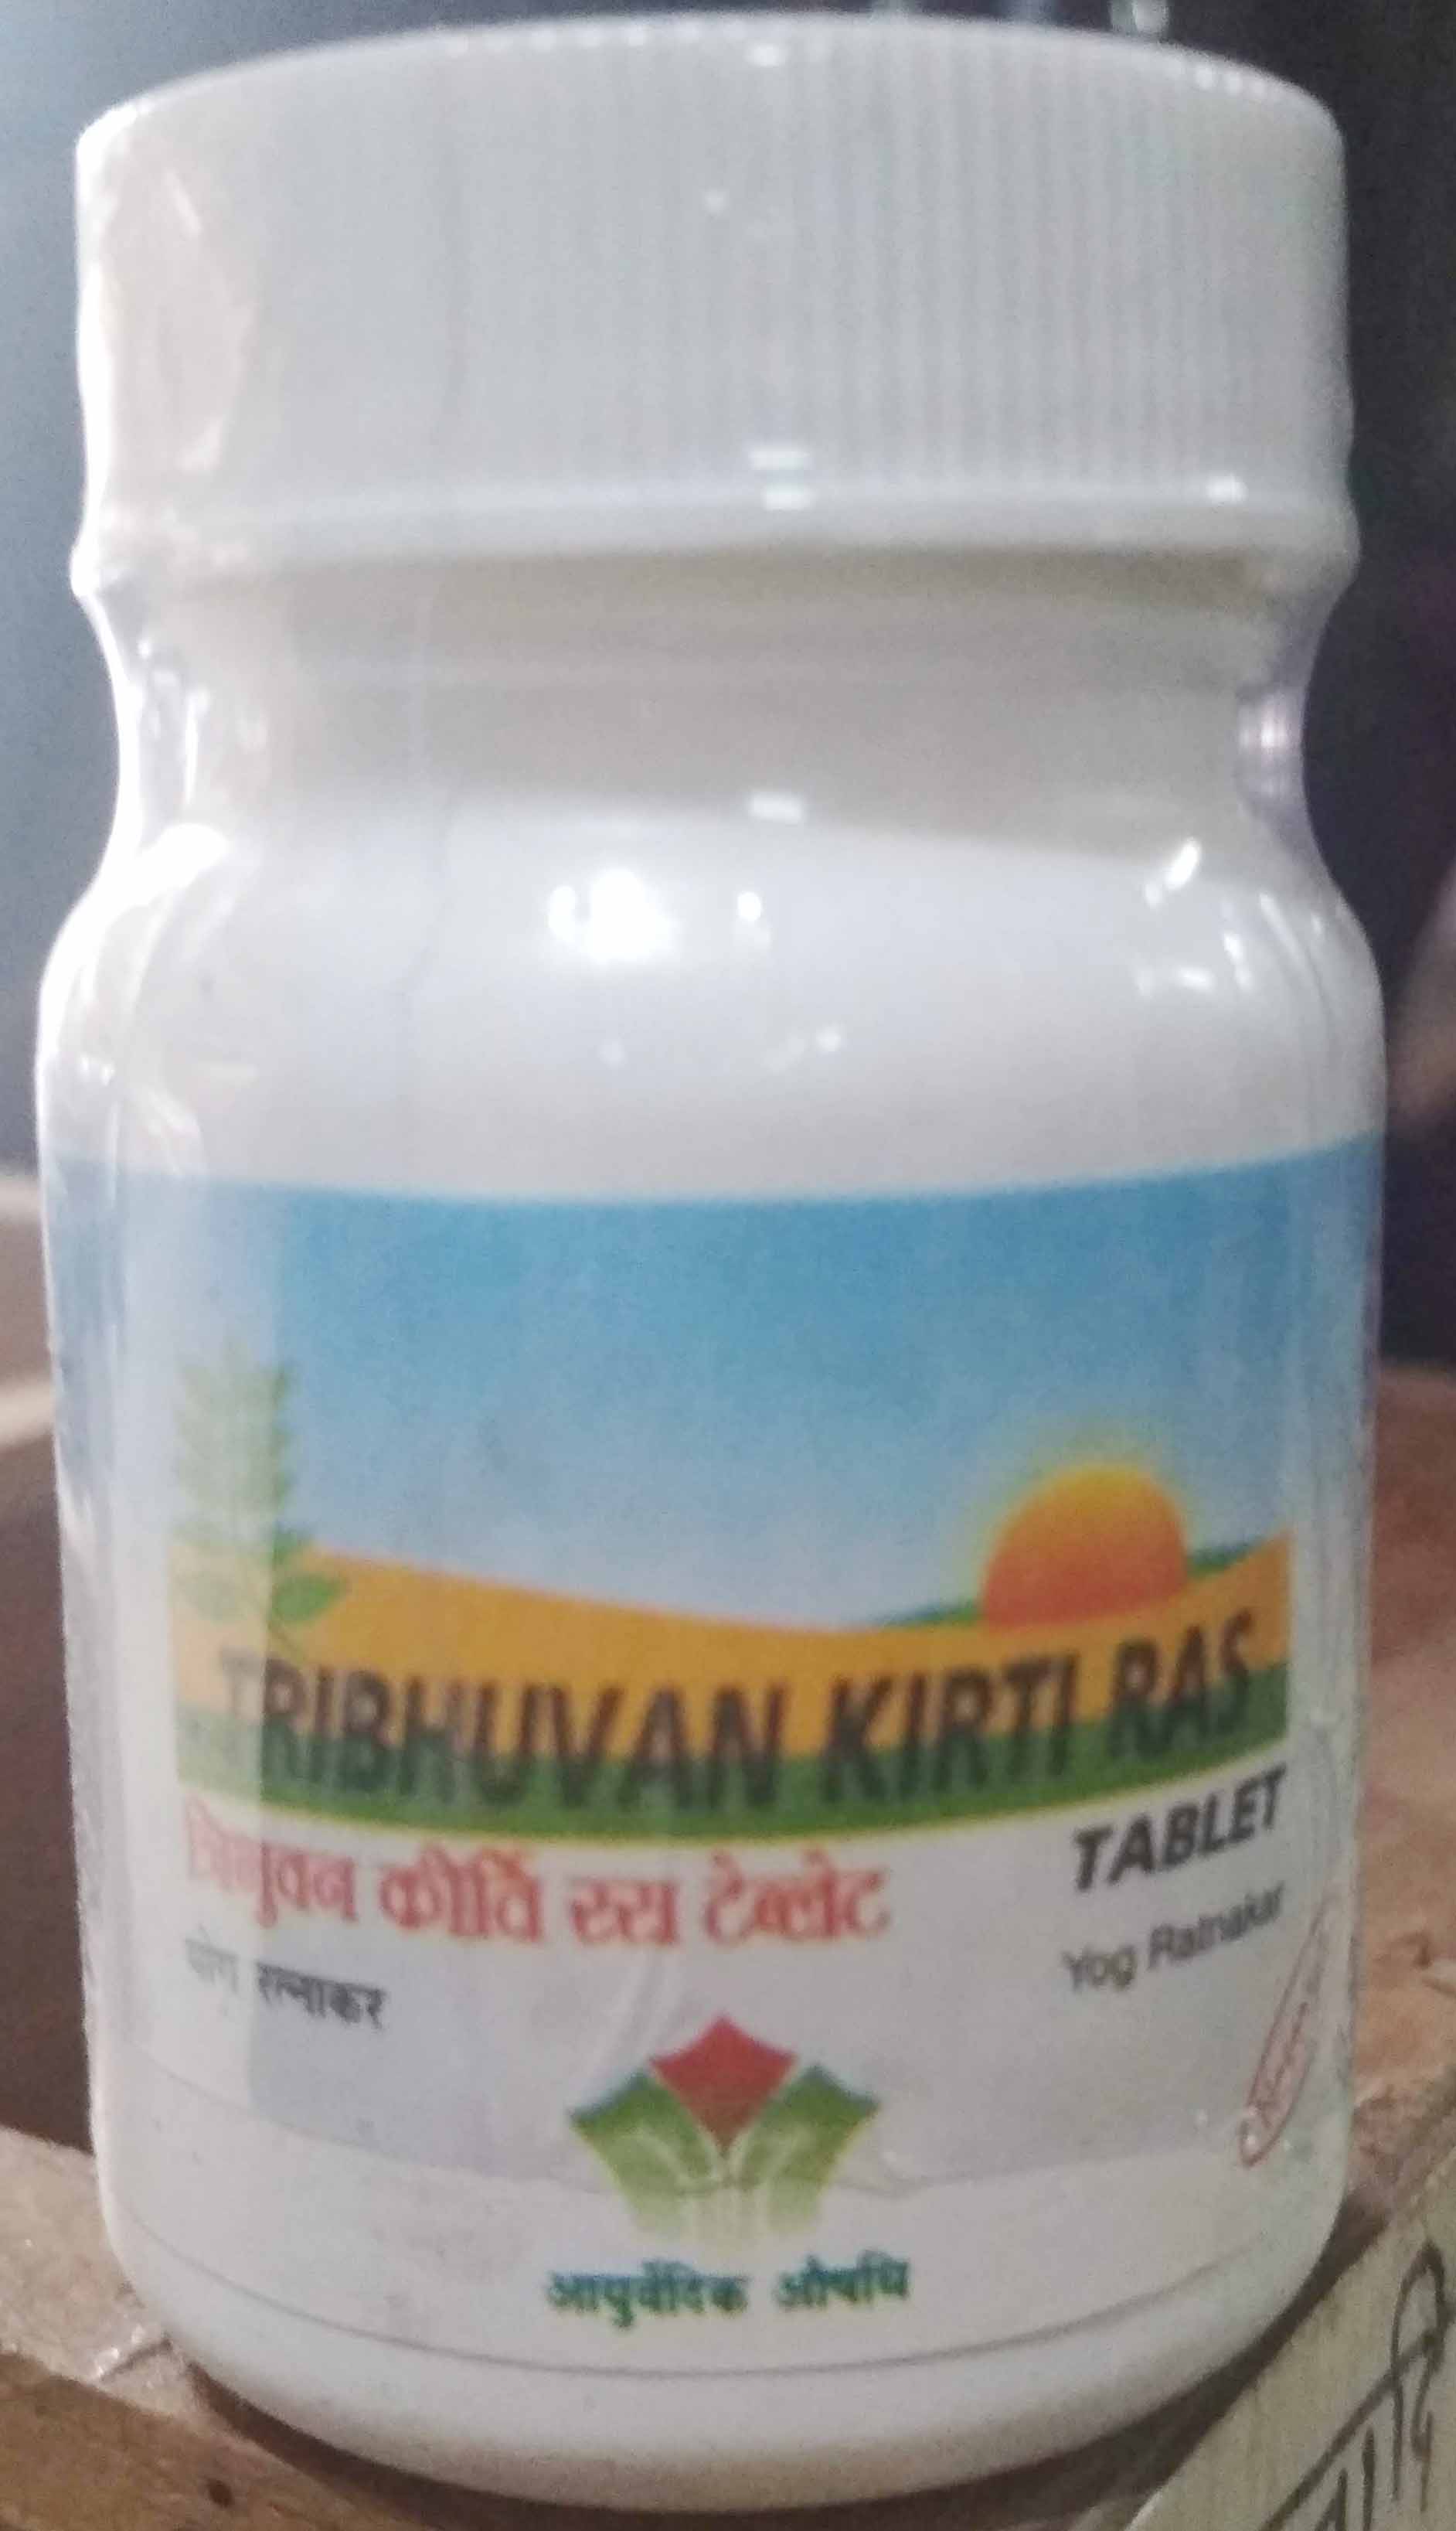 tribhuvan kirti ras 1200tabs upto 20% off free shipping nagarjun pharma gujarat